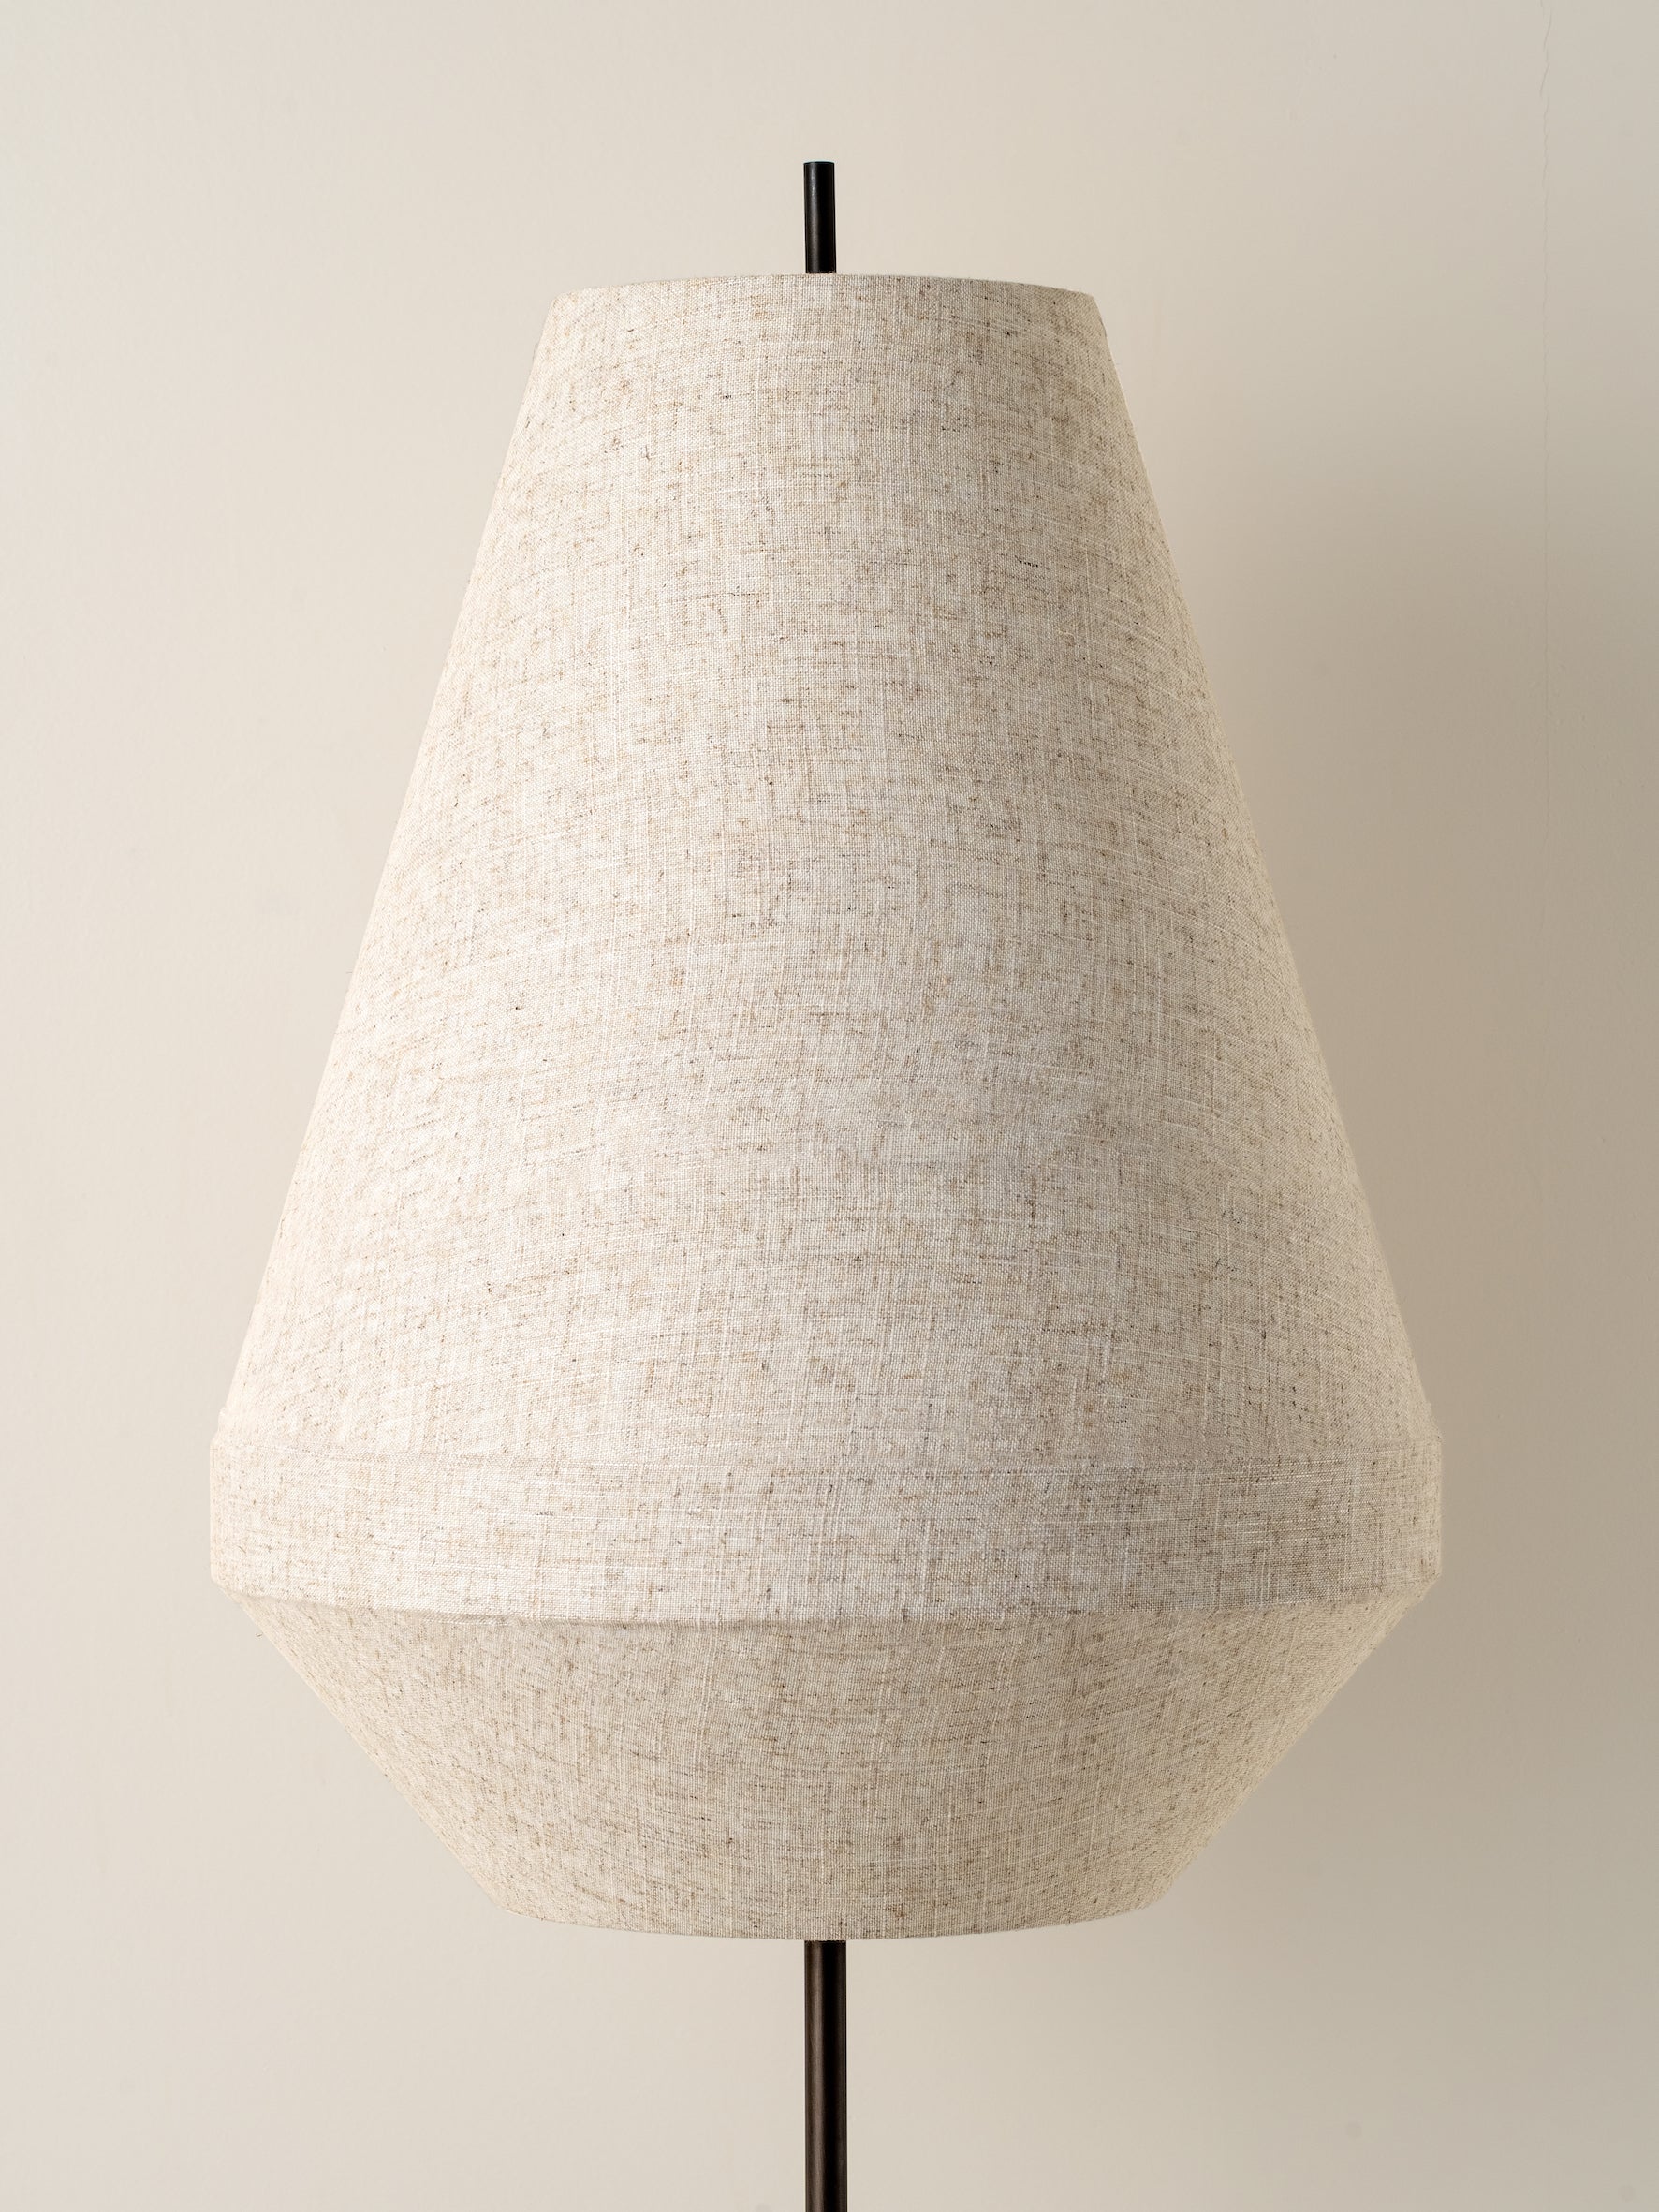 Solara - aged brass and layered natural linen floor lamp | Floor Lamp | Lights & Lamps | UK | Modern Affordable Designer Lighting